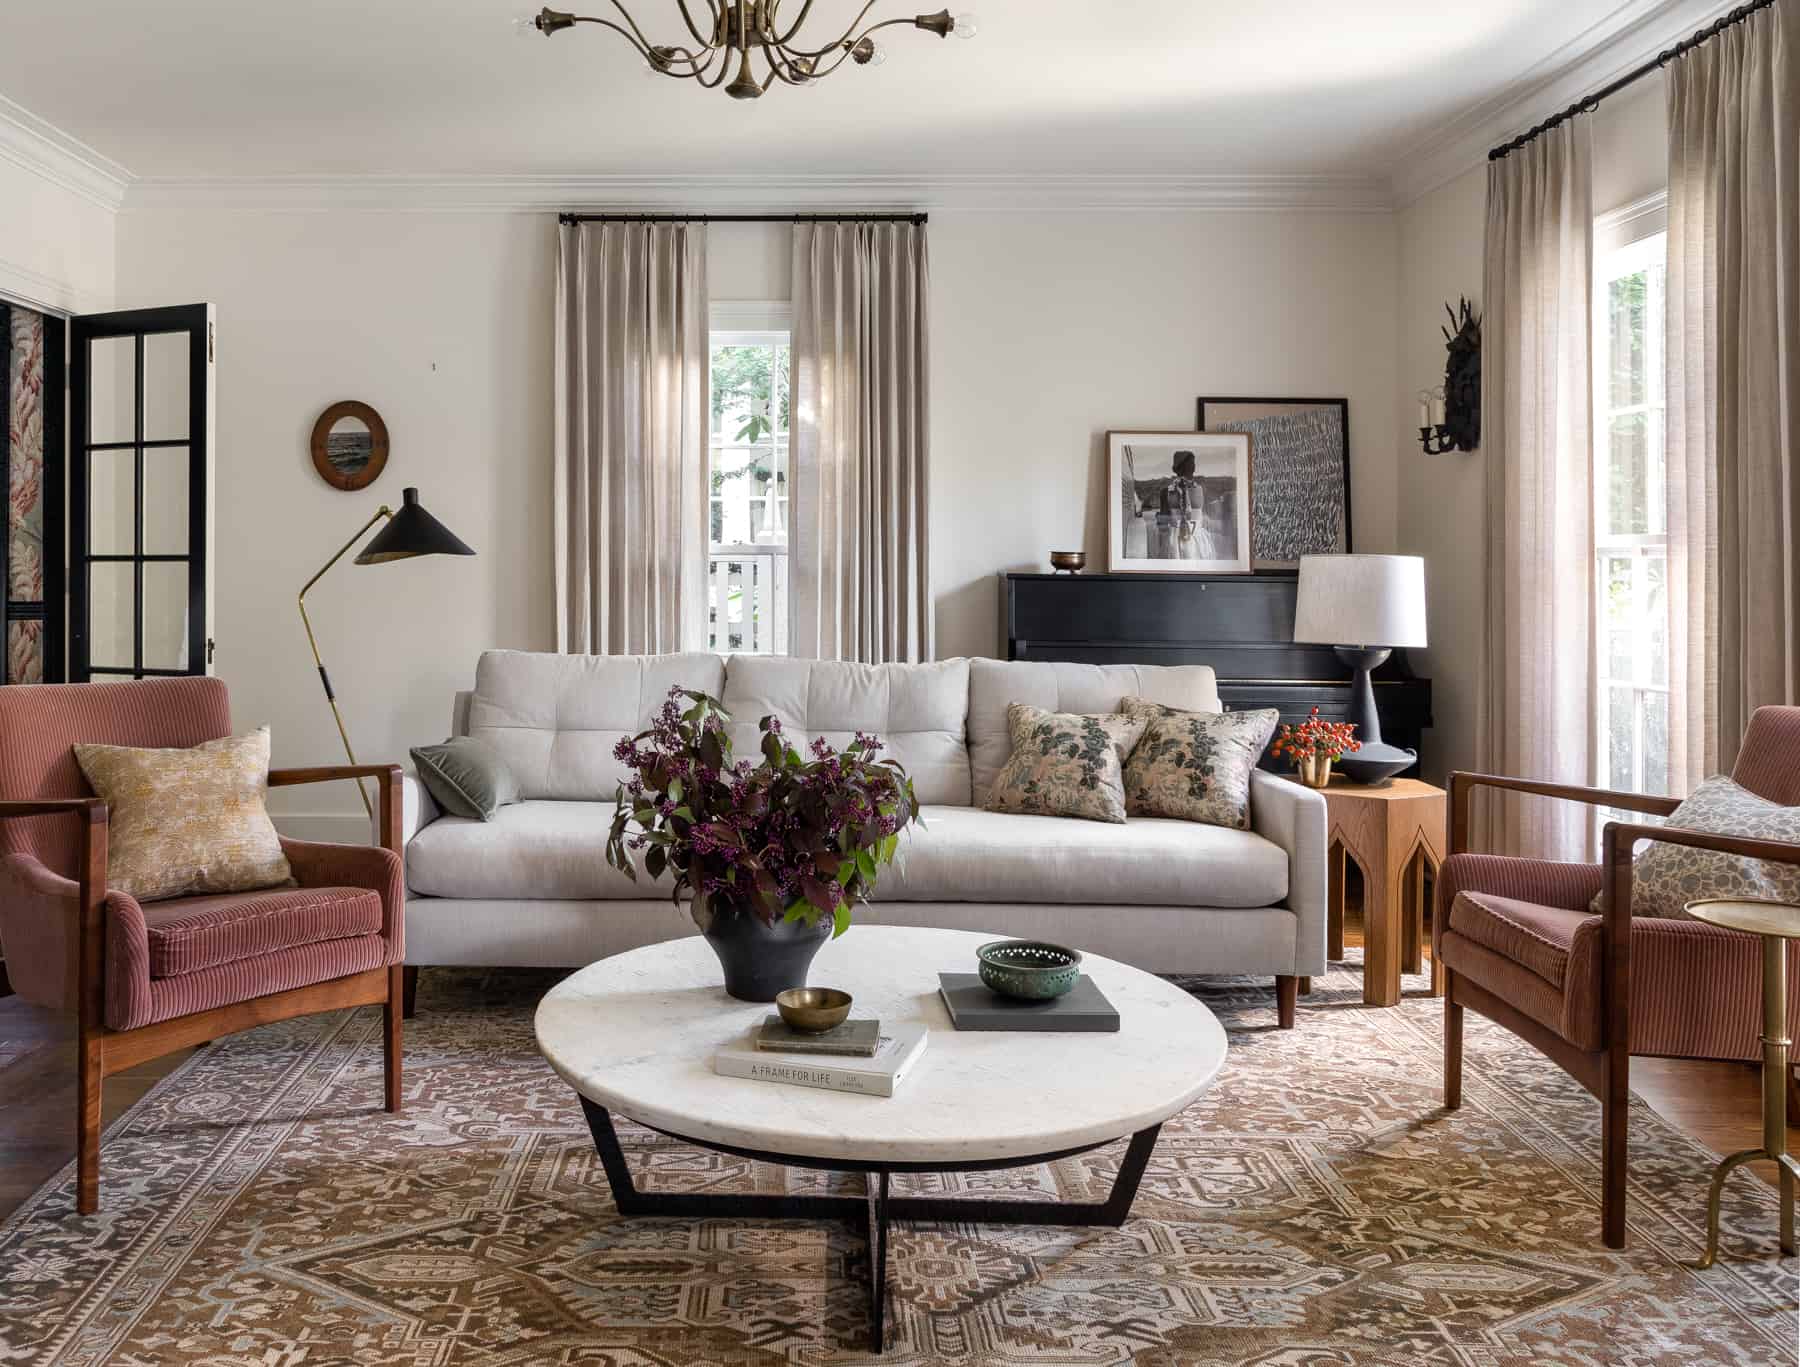 Elegant traditional living room interior design.